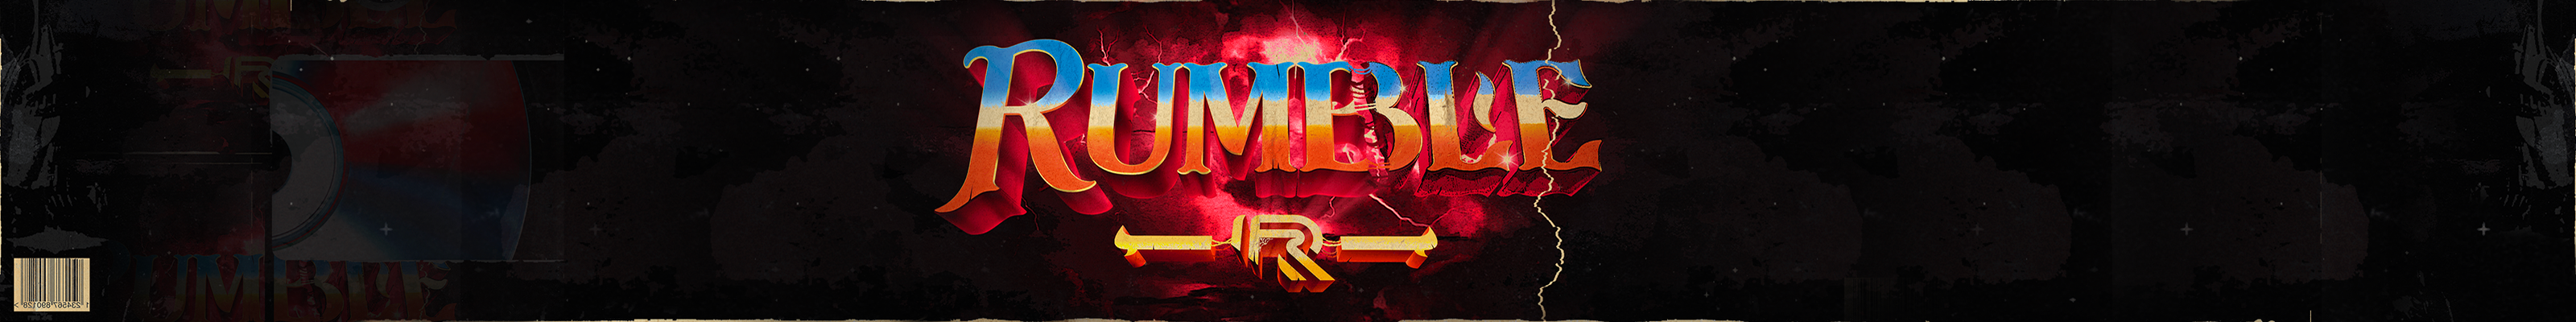 Rumble Dzn's profile banner